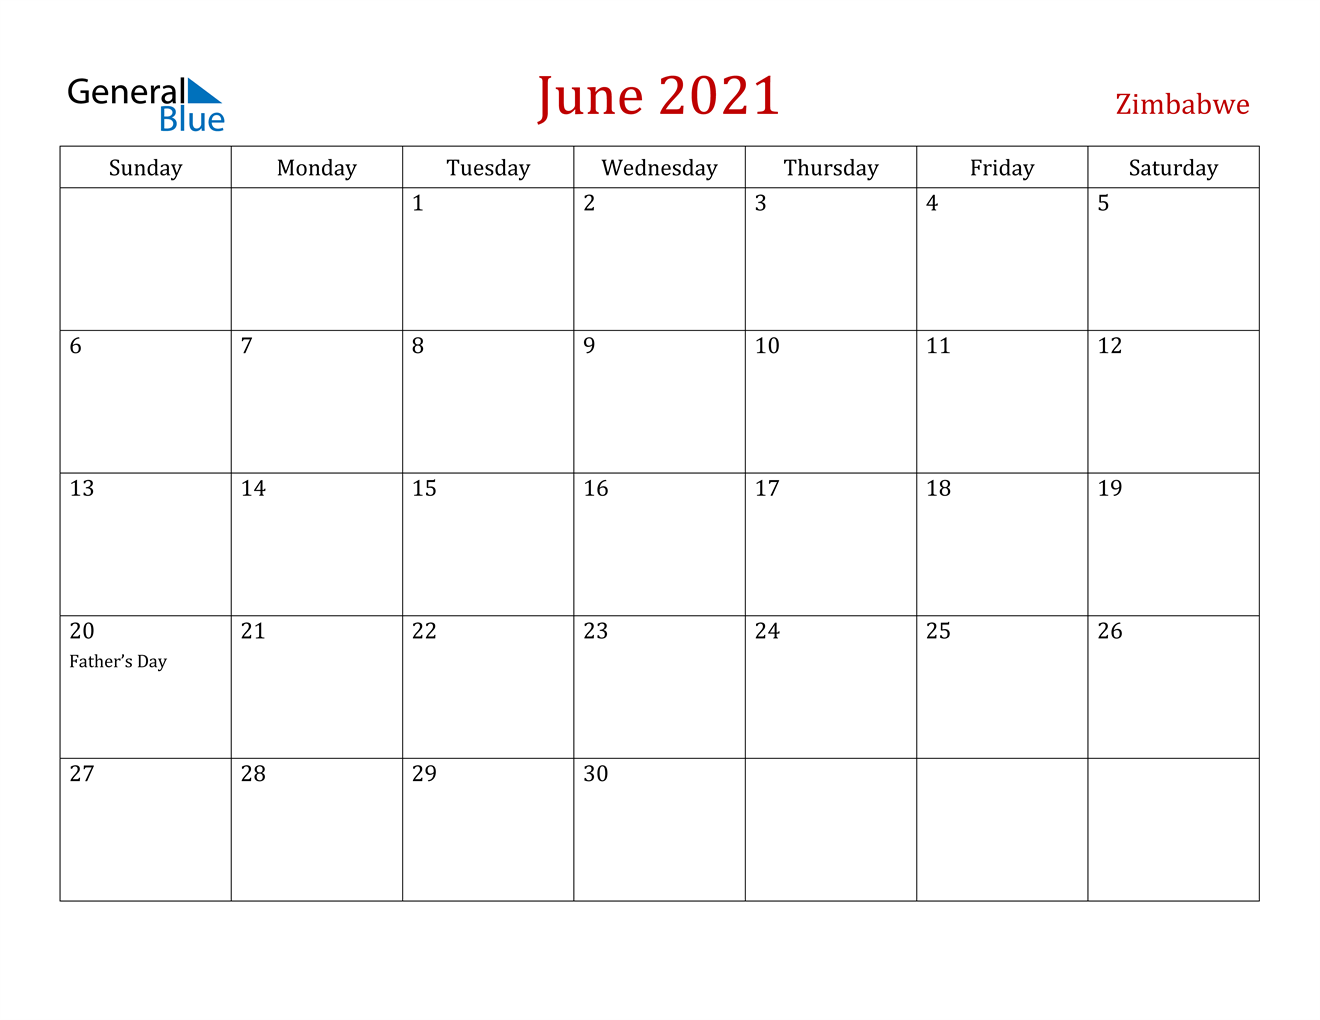 Zimbabwe June 2021 Calendar with Holidays